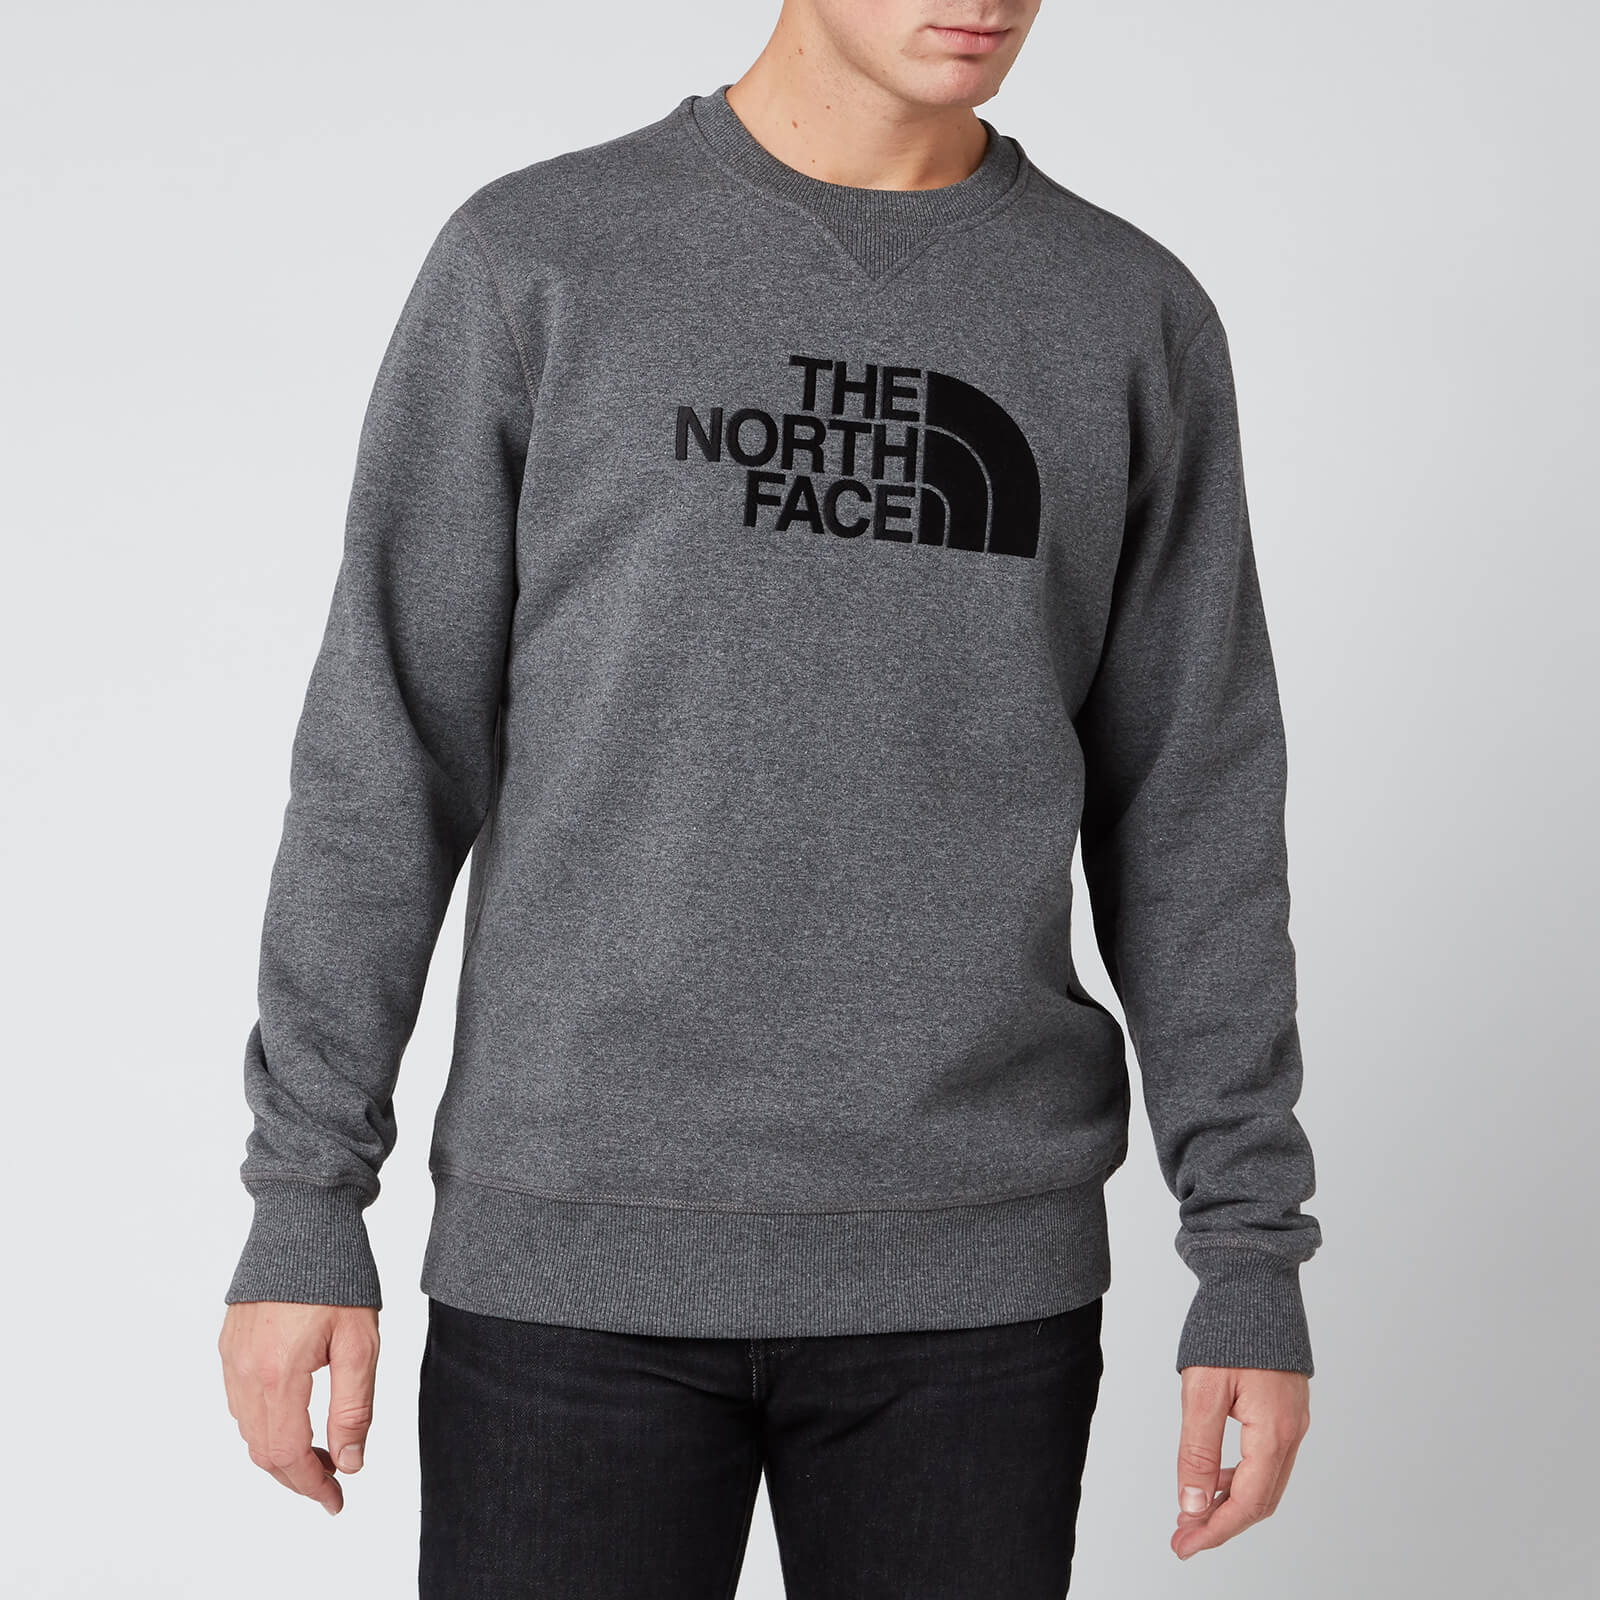 The North Face Men's Drew Peak Crew Sweatshirt - TNF Medium Grey/TNF Black - S